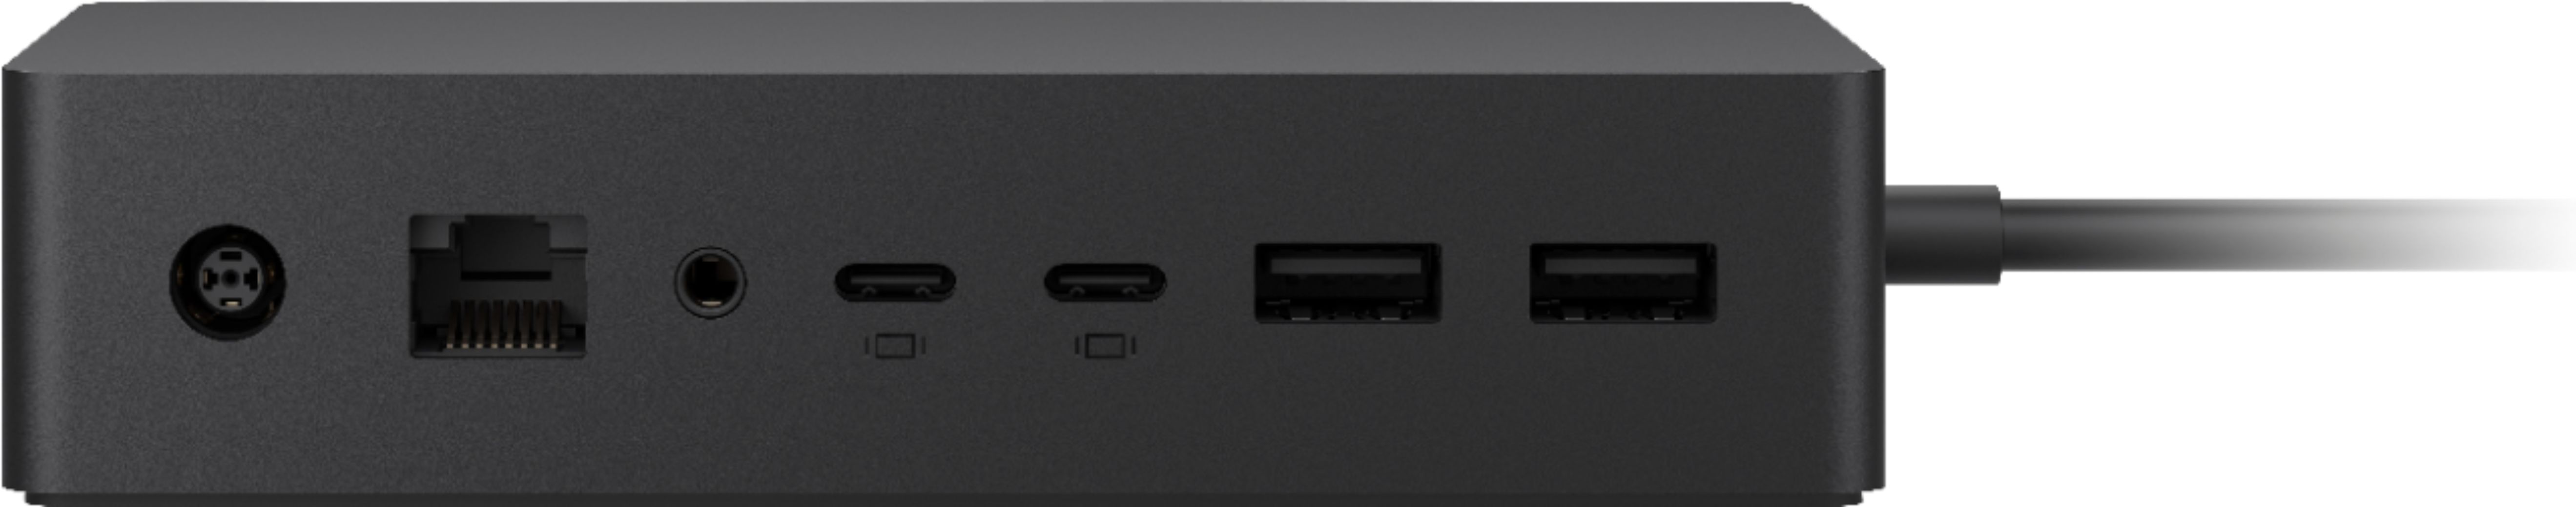 Microsoft - Geek Squad Certified Refurbished Surface Dock 2 - Black